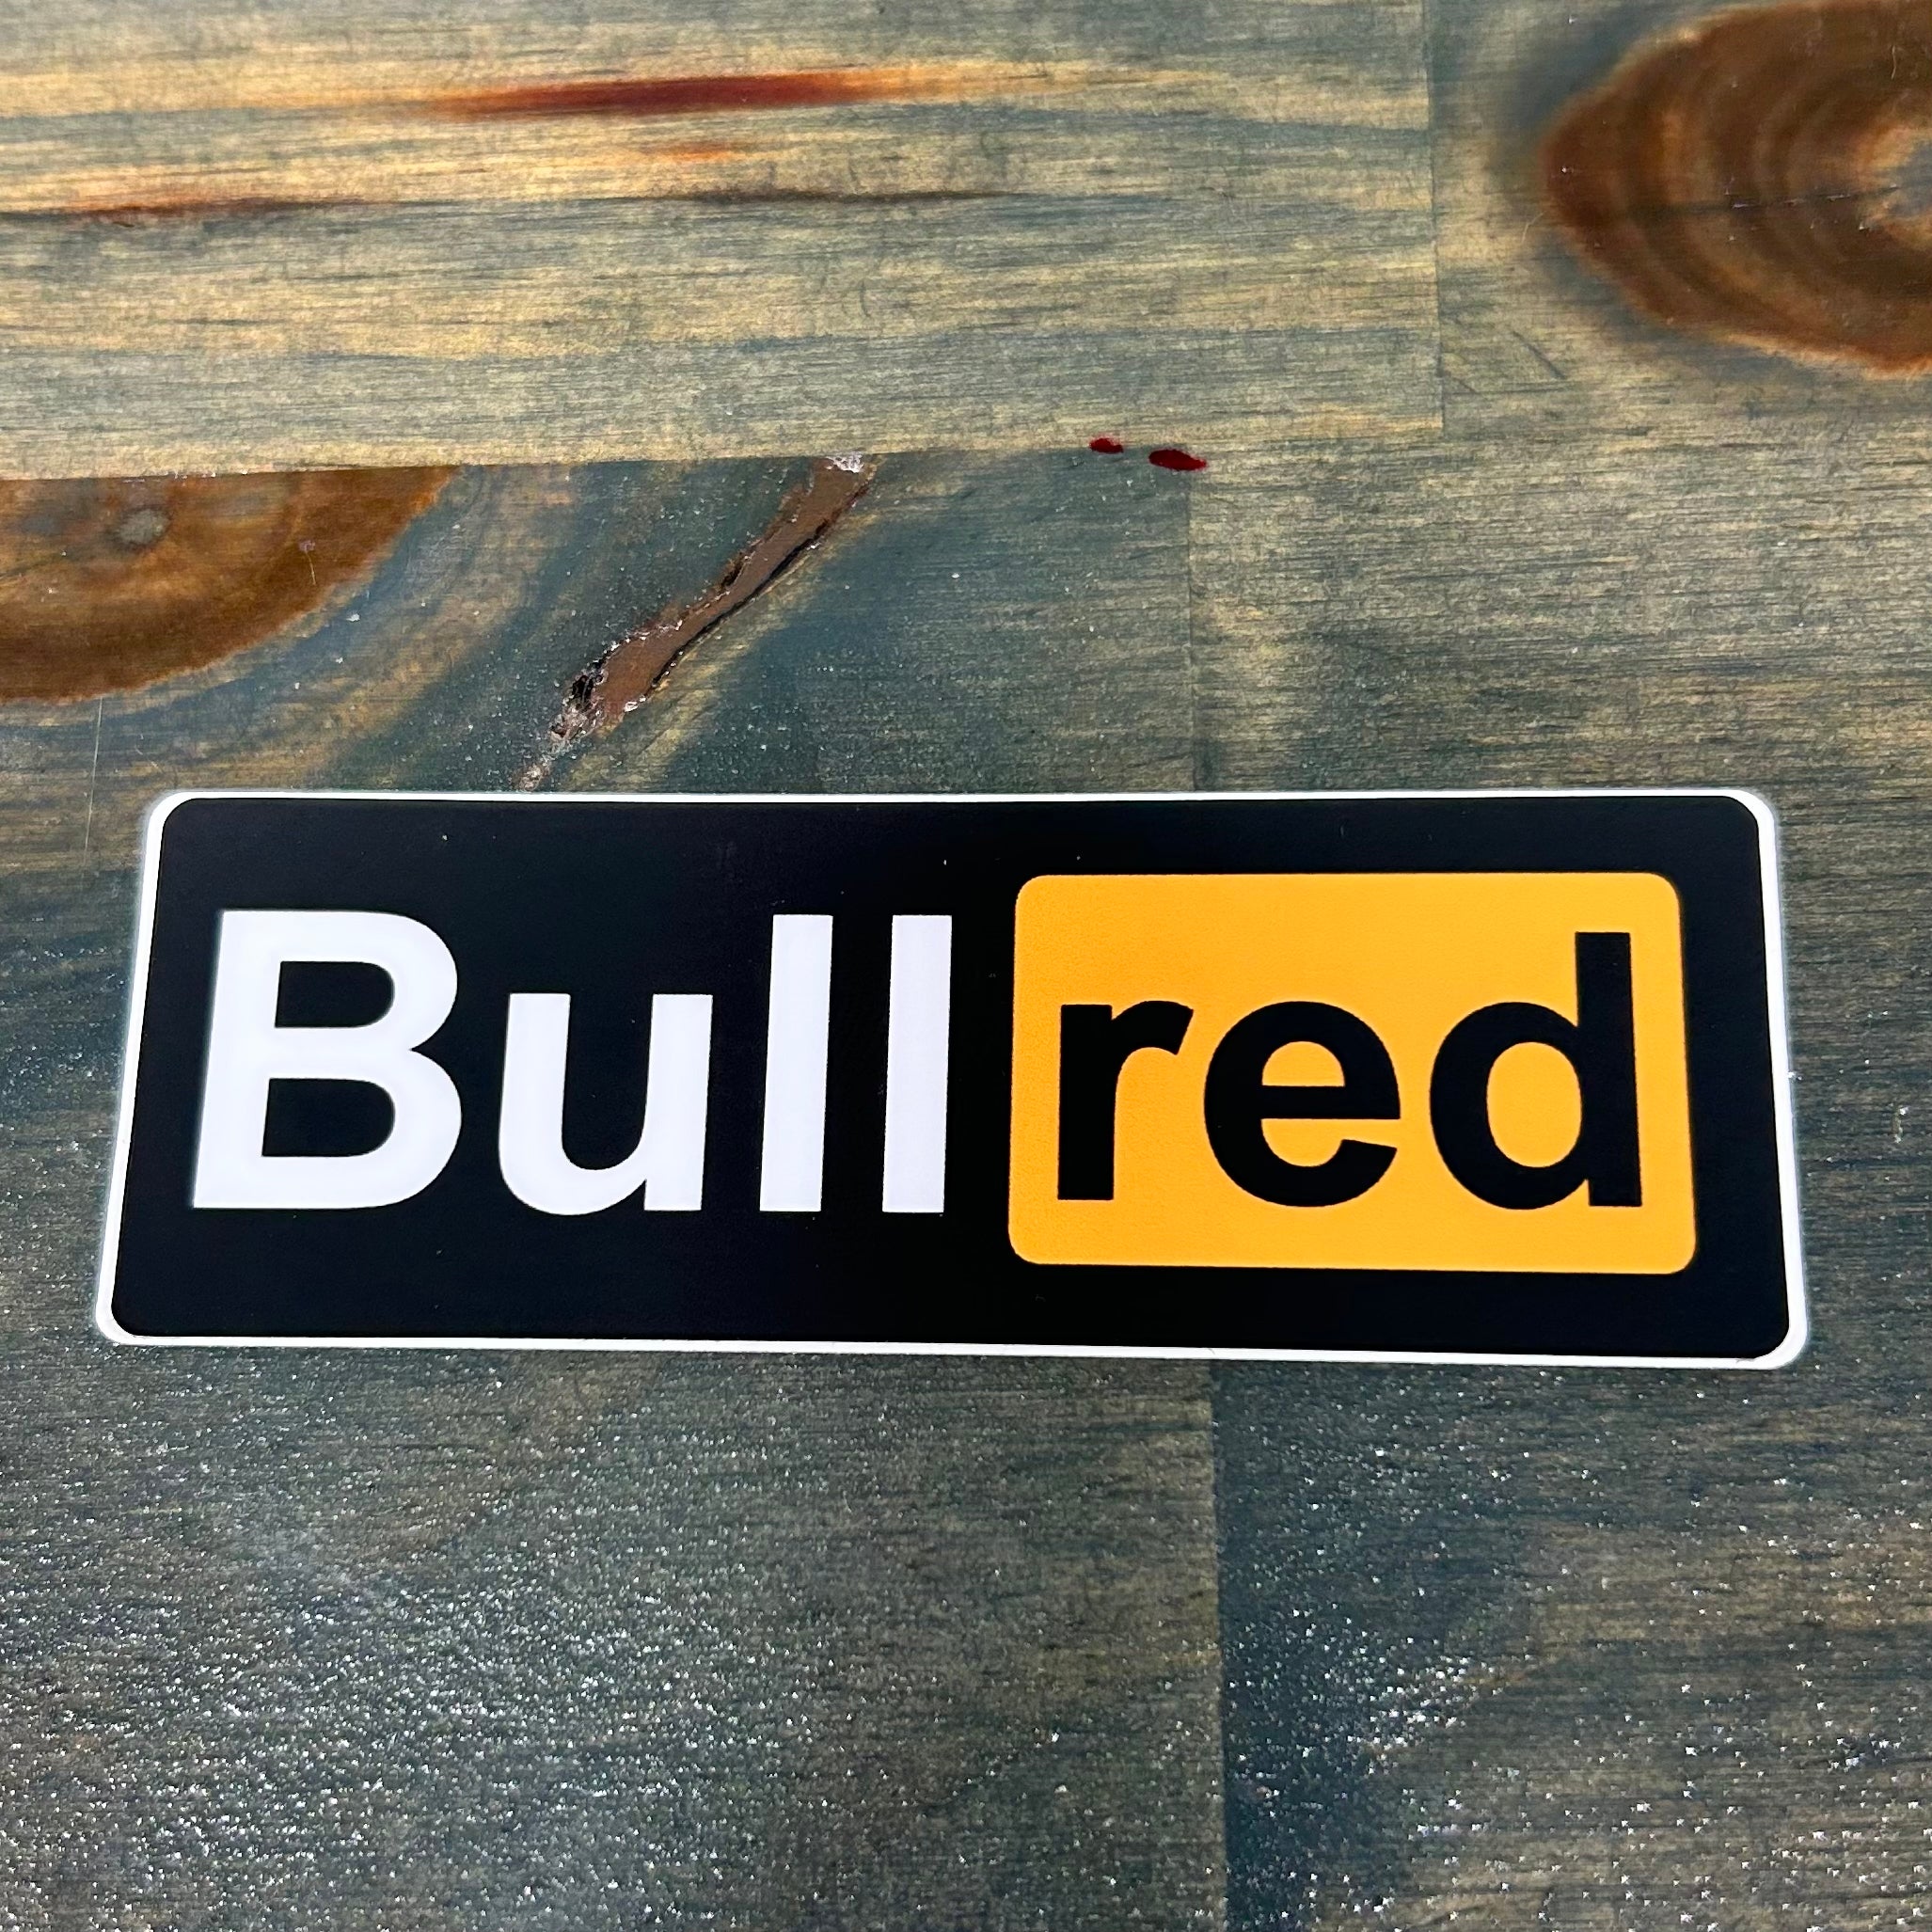 Sightcast Bull Red sticker